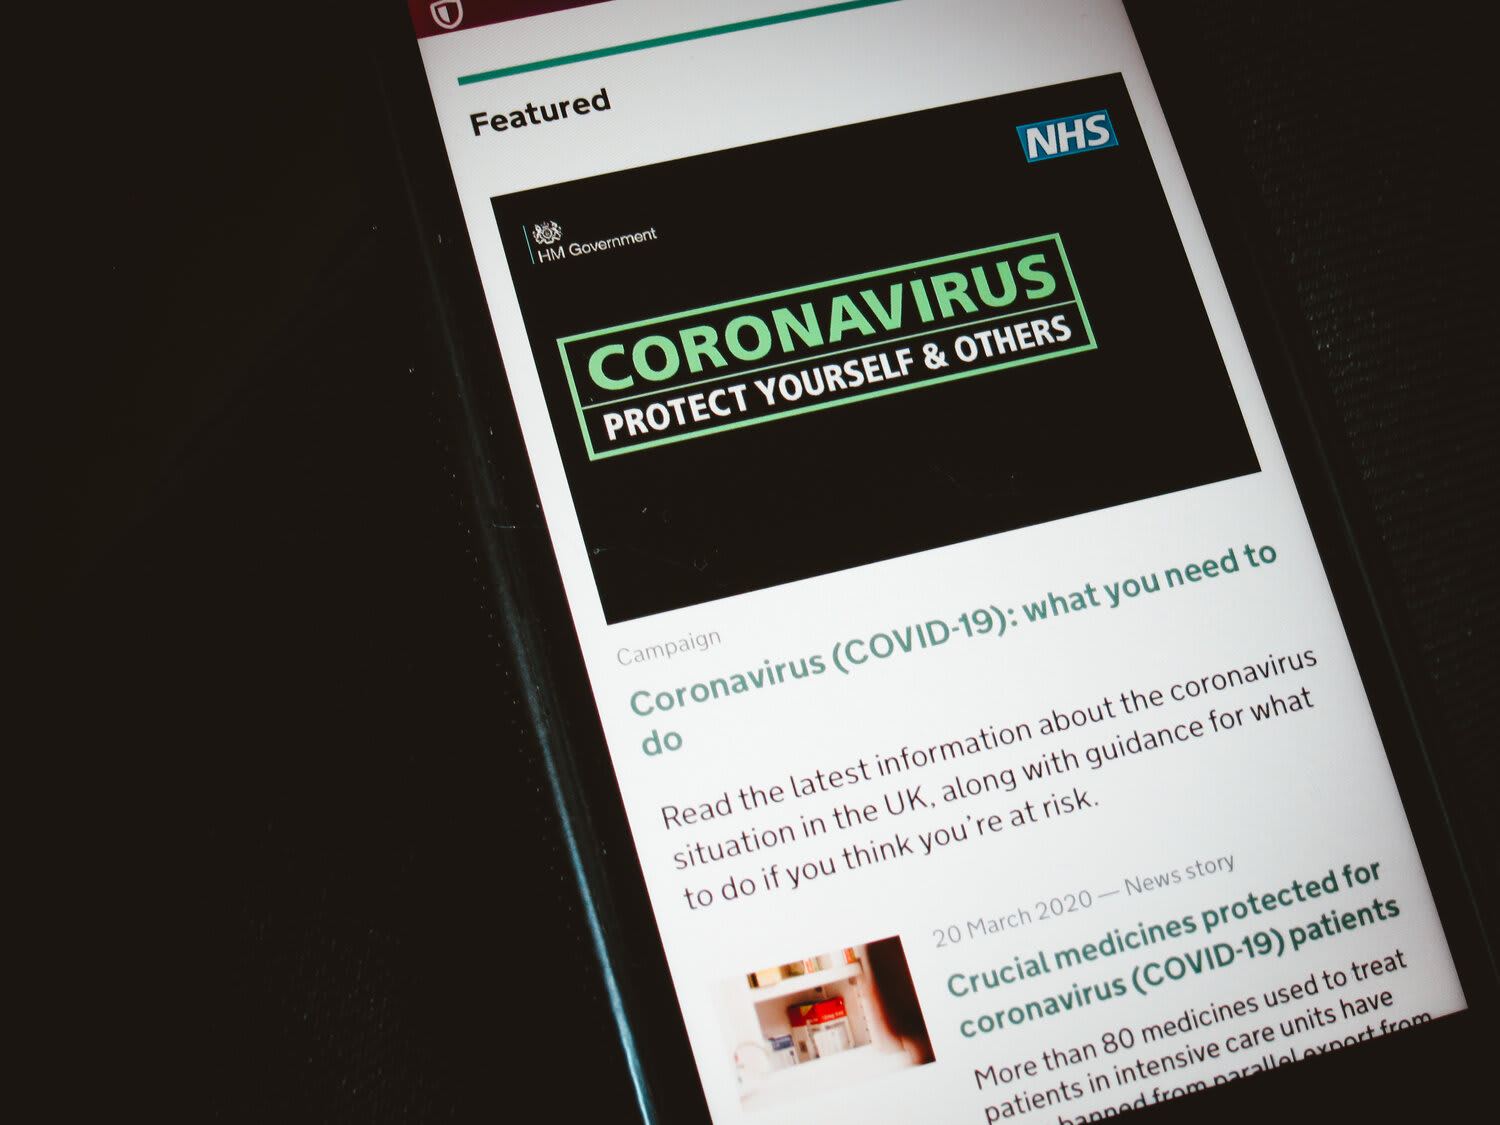 Humana adds telehealth coverage, services to help combat Coronavirus pandemic